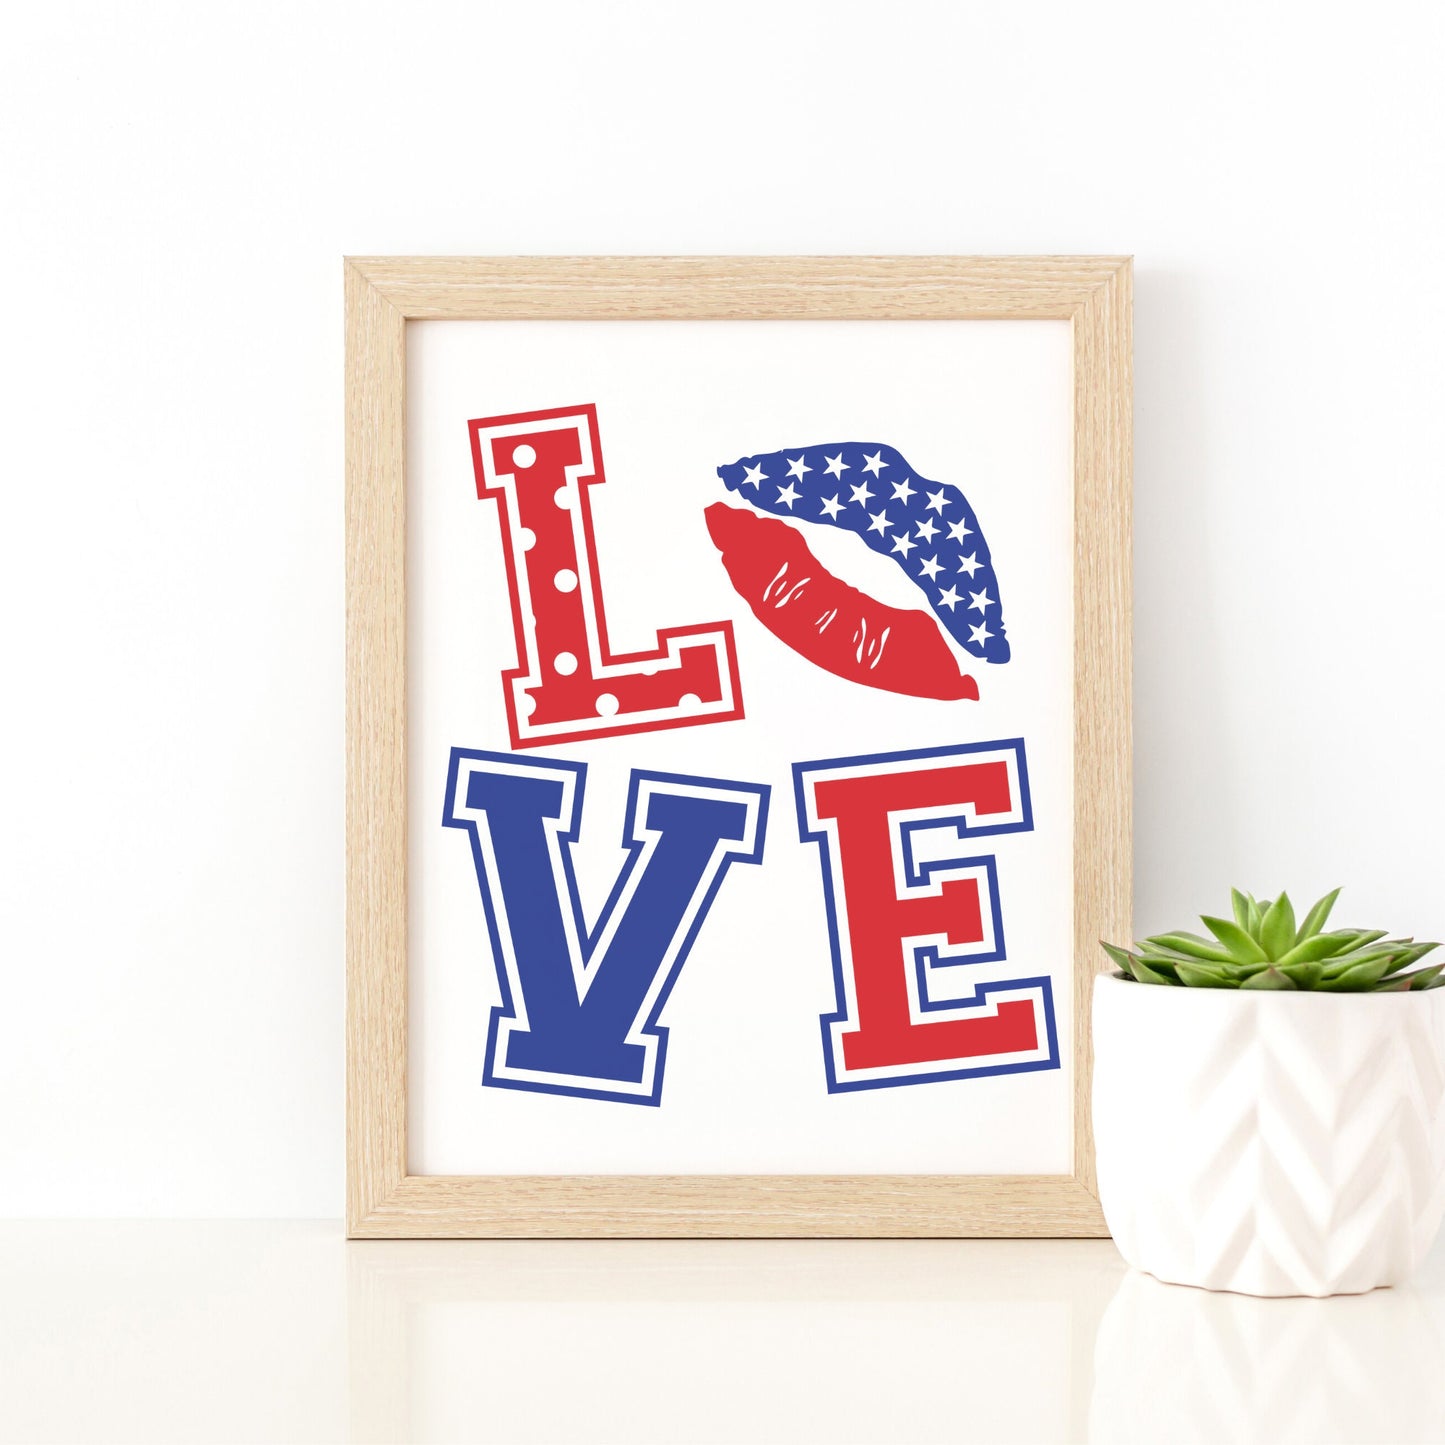 LOVE Patriotic Digital Greeting Card Art with KISS